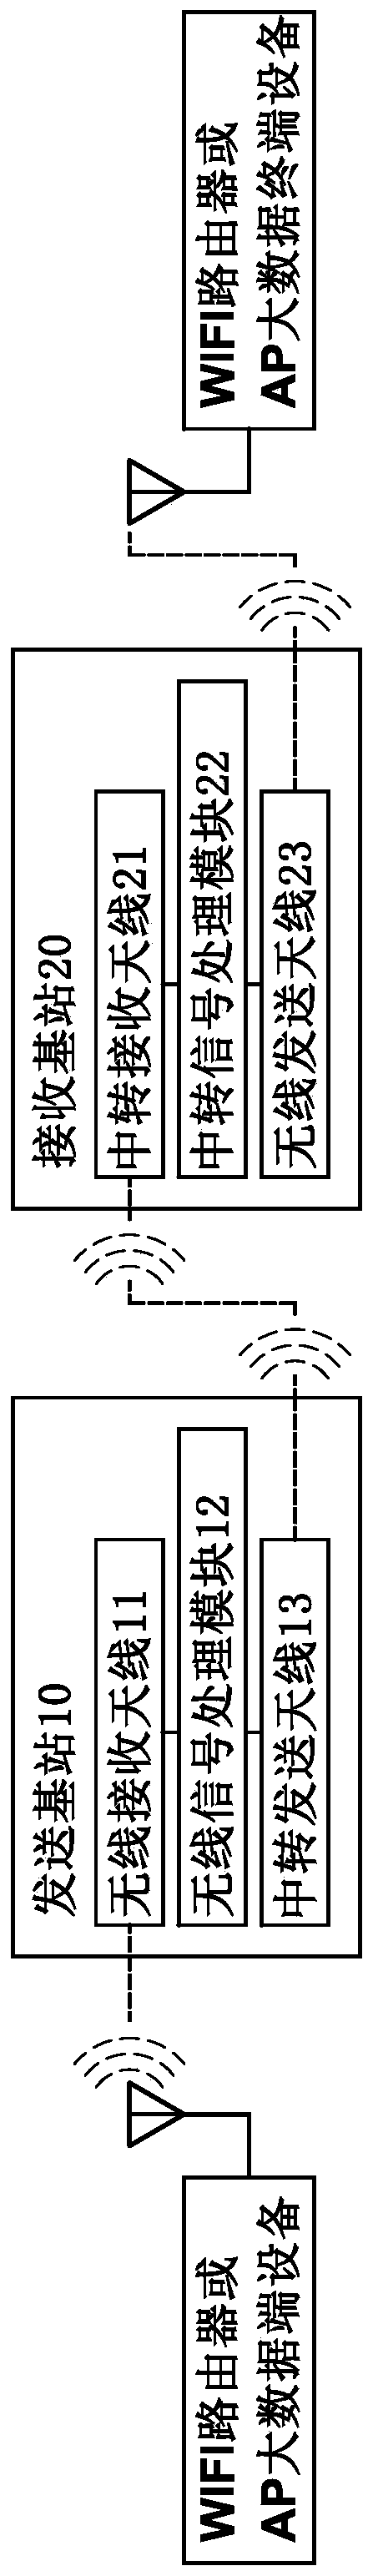 Wireless signal transfer system and wireless signal transfer method